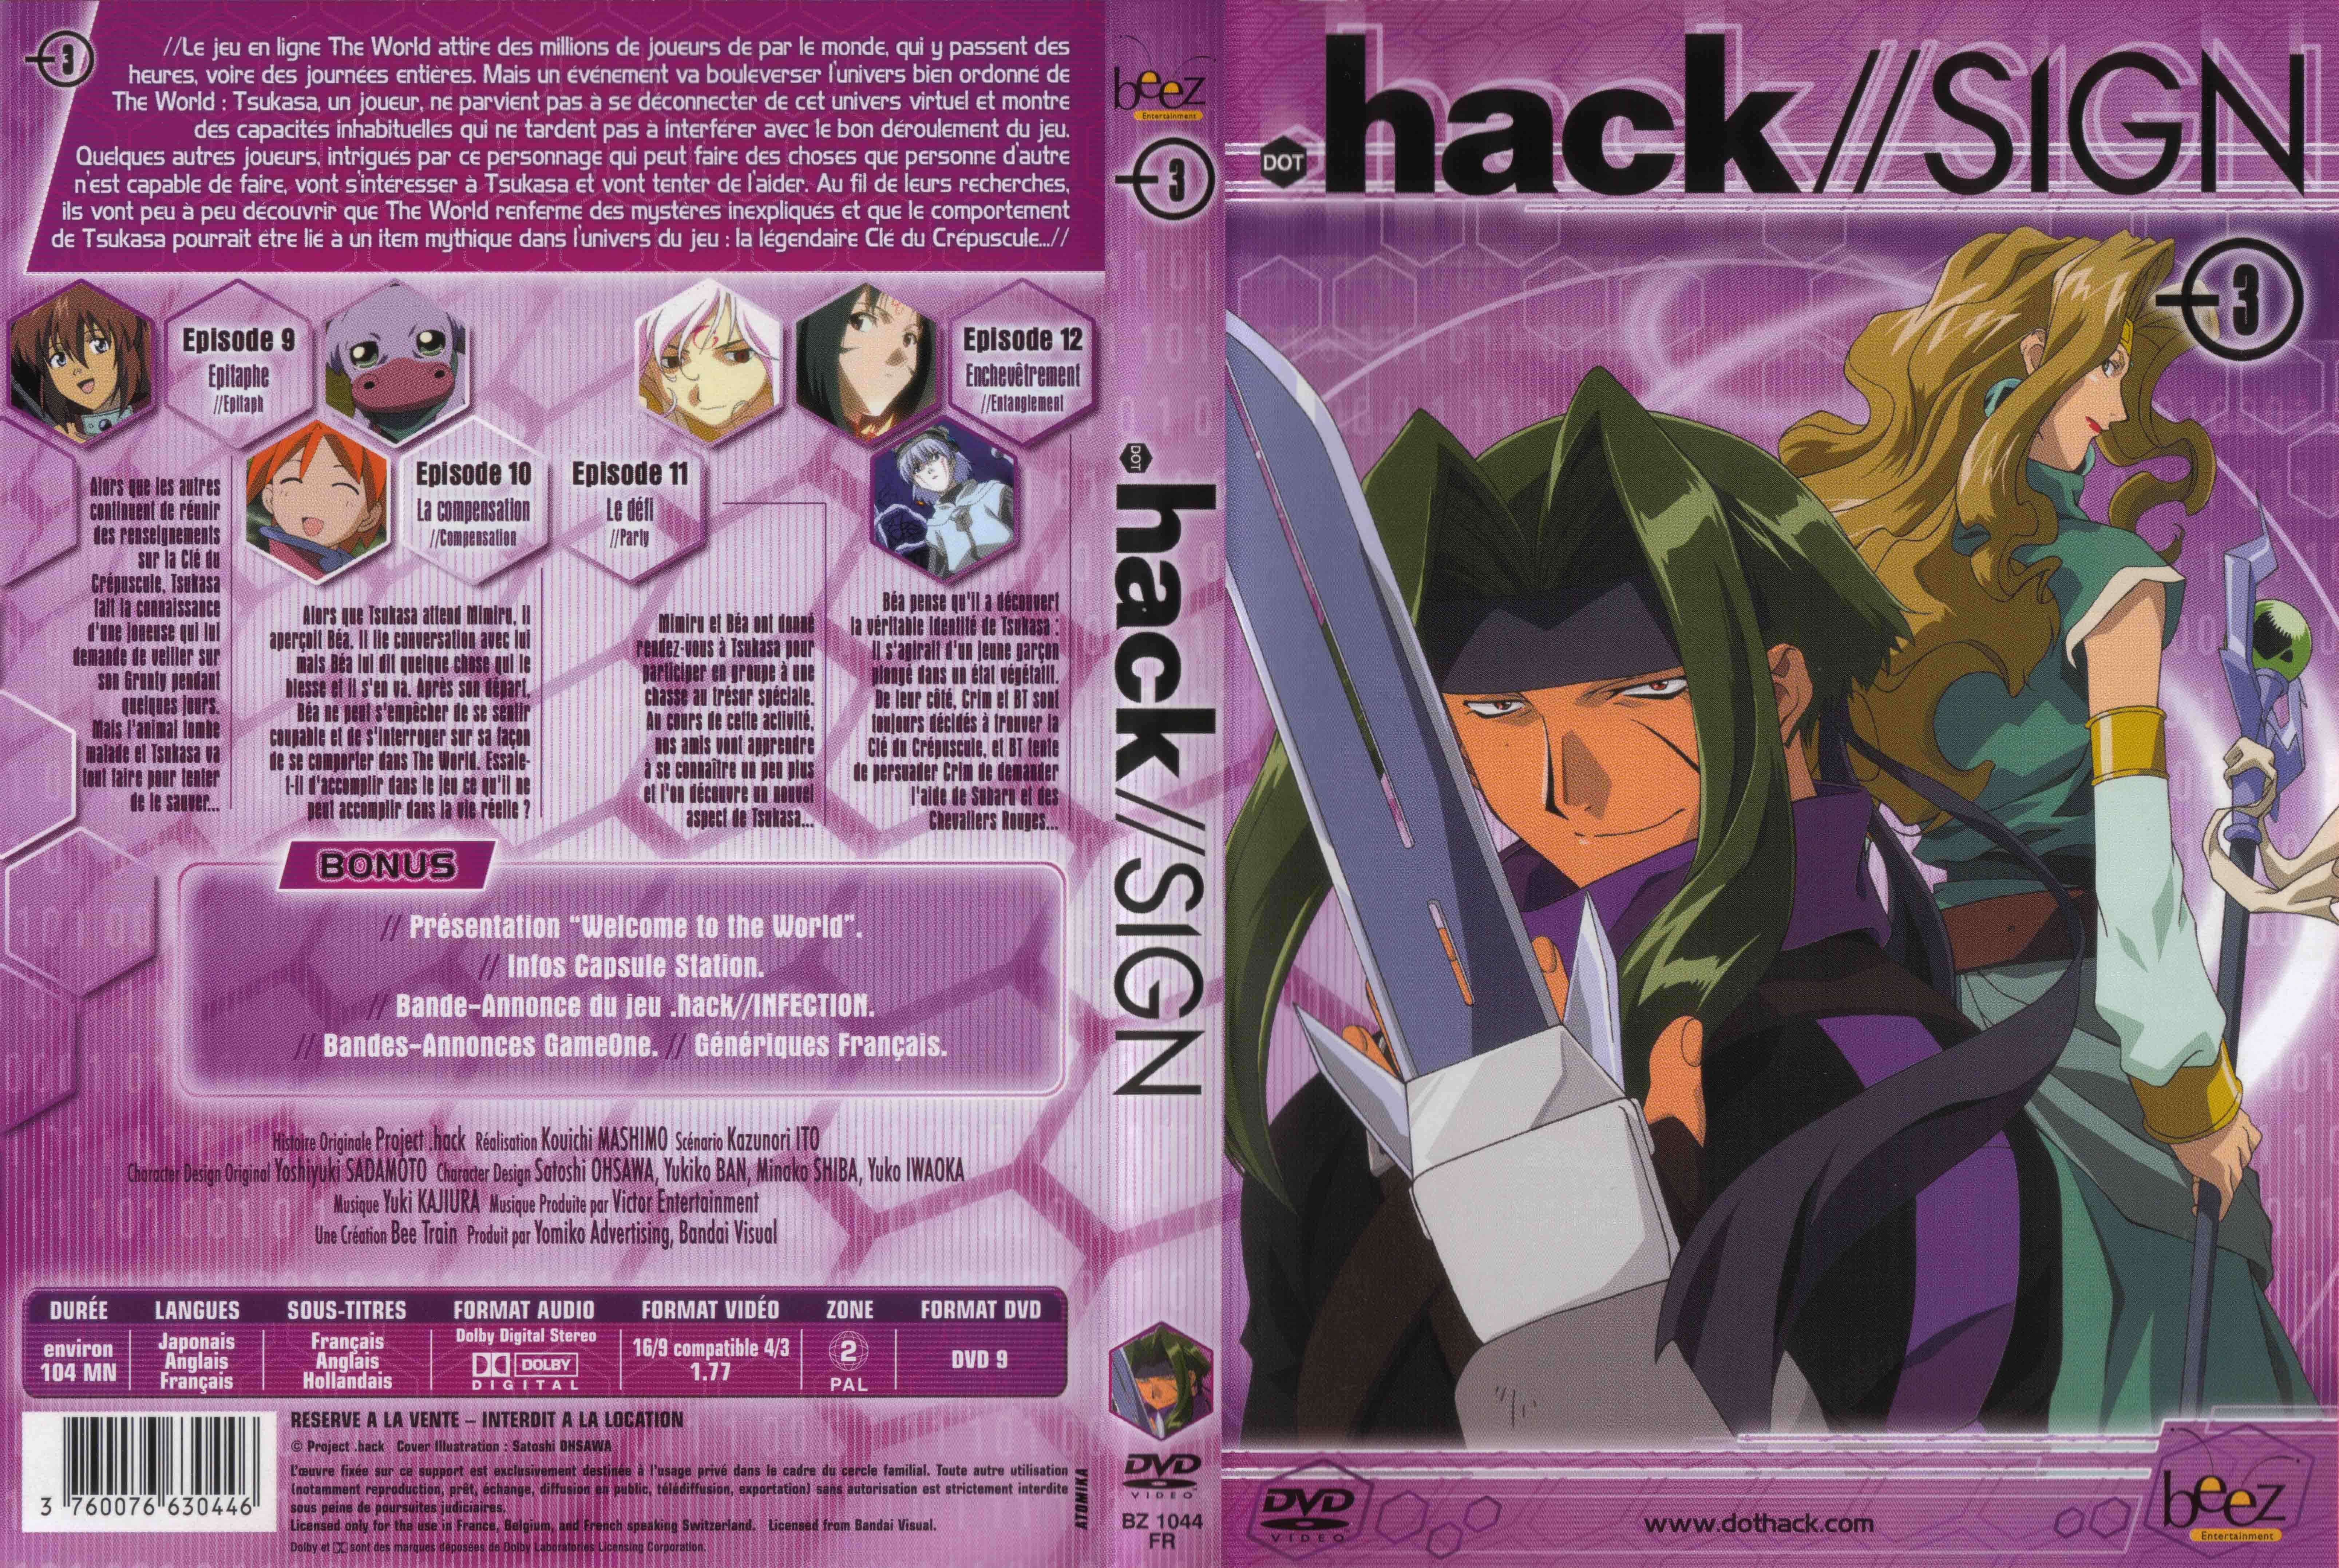 Jaquette DVD Hack vol 3